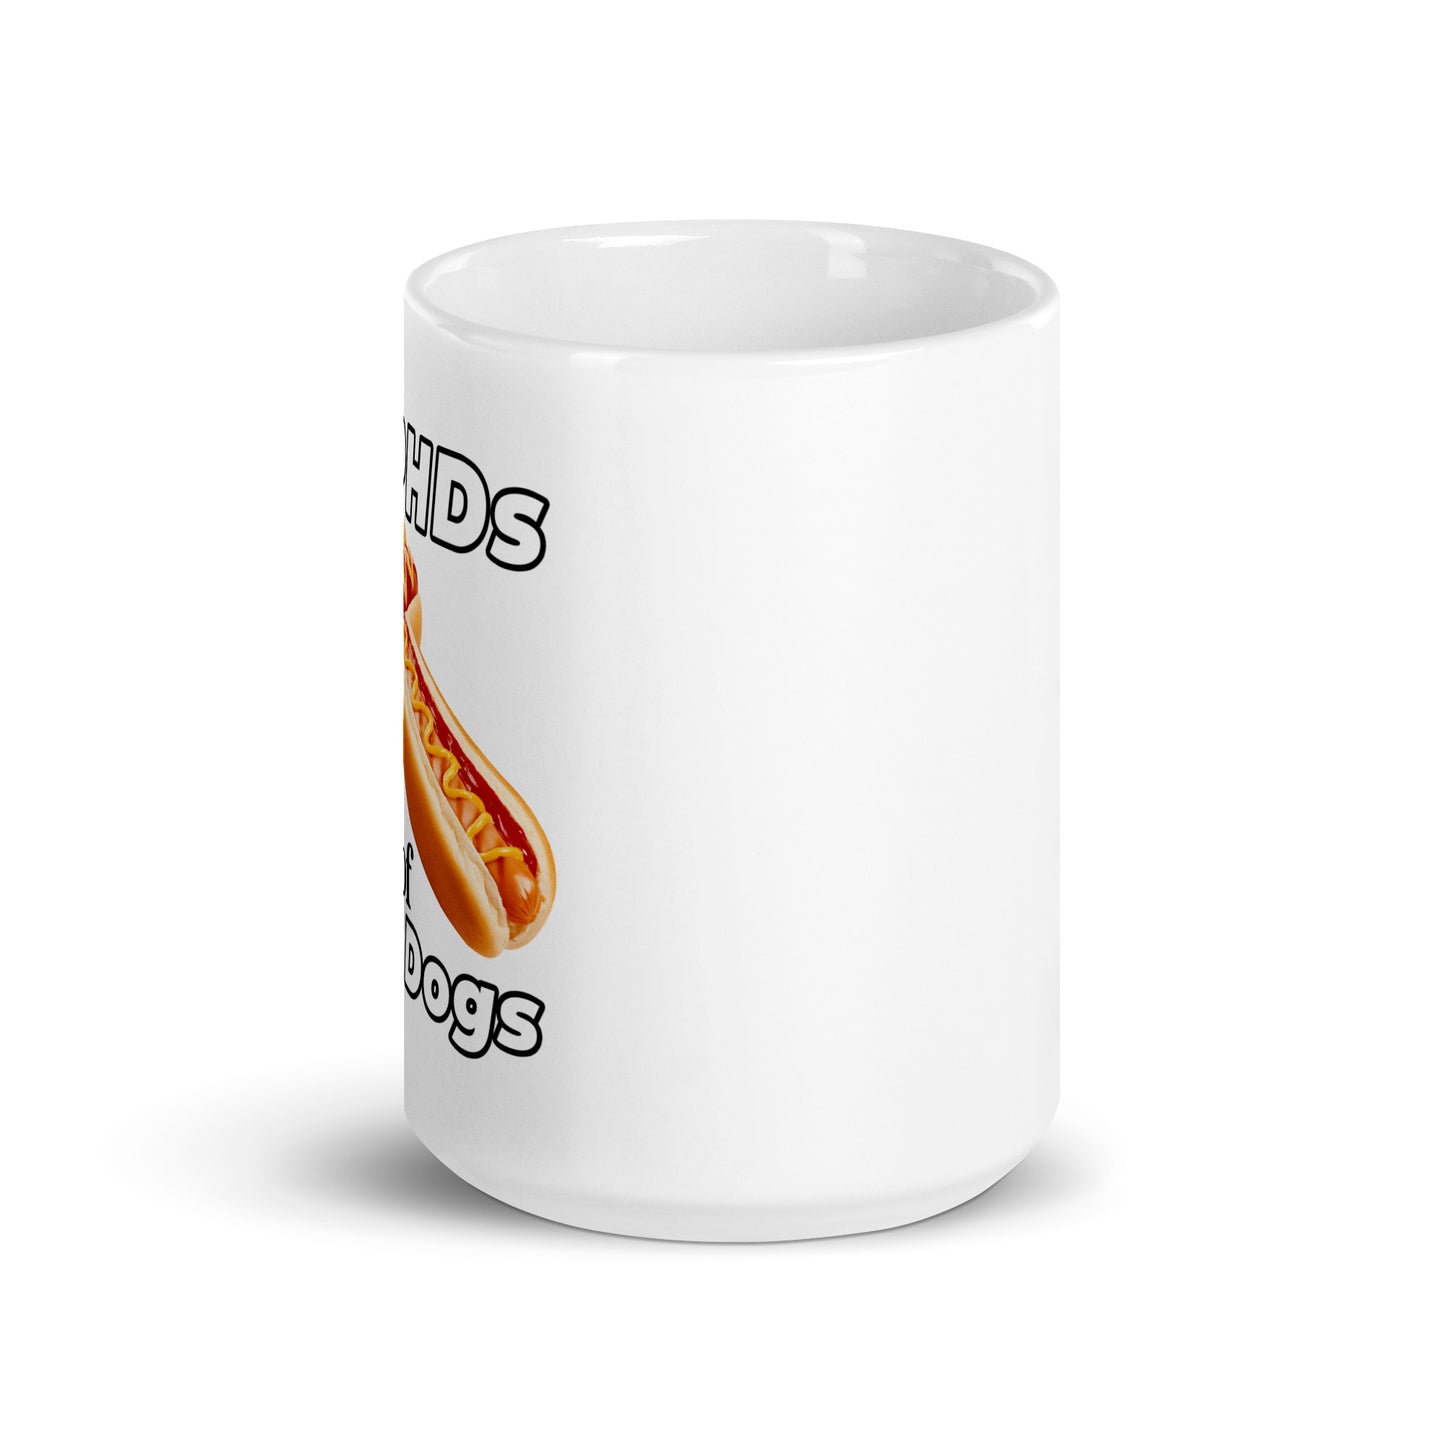 I Have PHDs (Plenty of Hot Dogs) mug